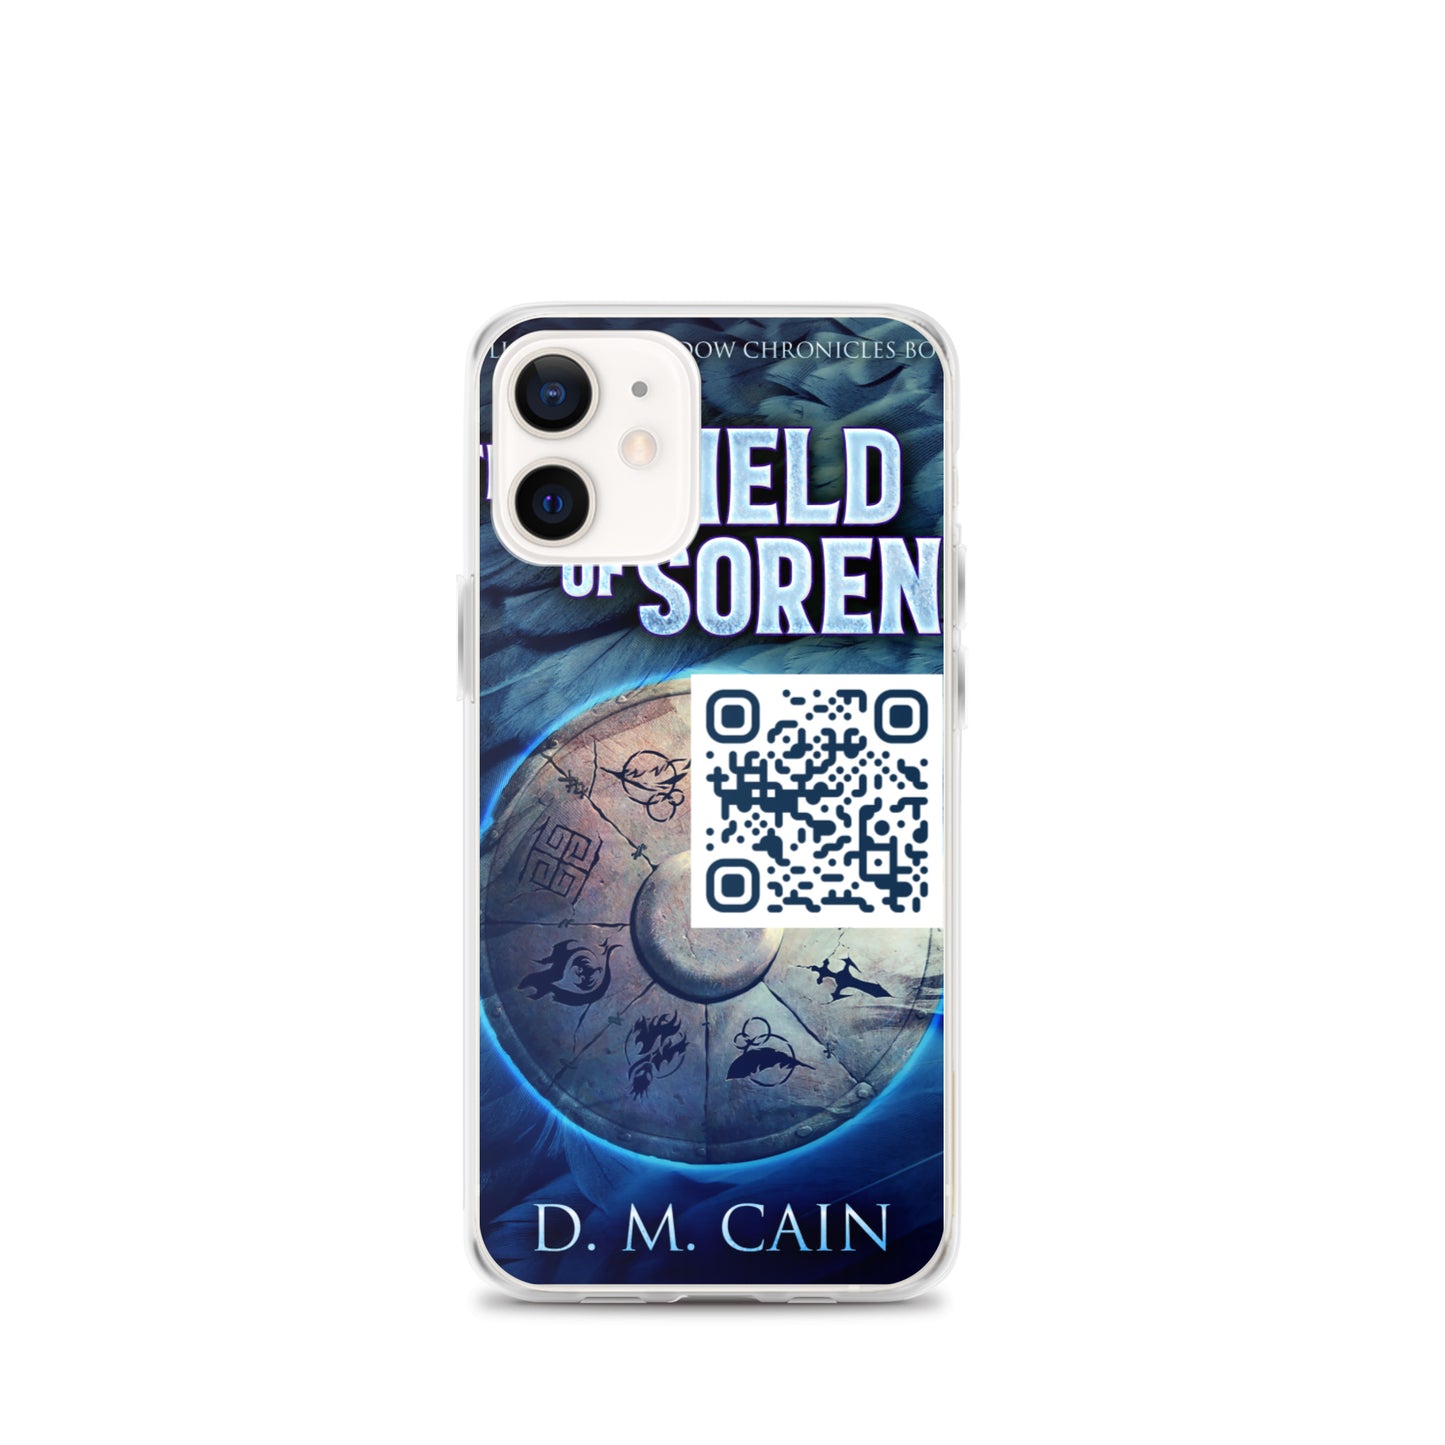 The Shield of Soren - iPhone Case